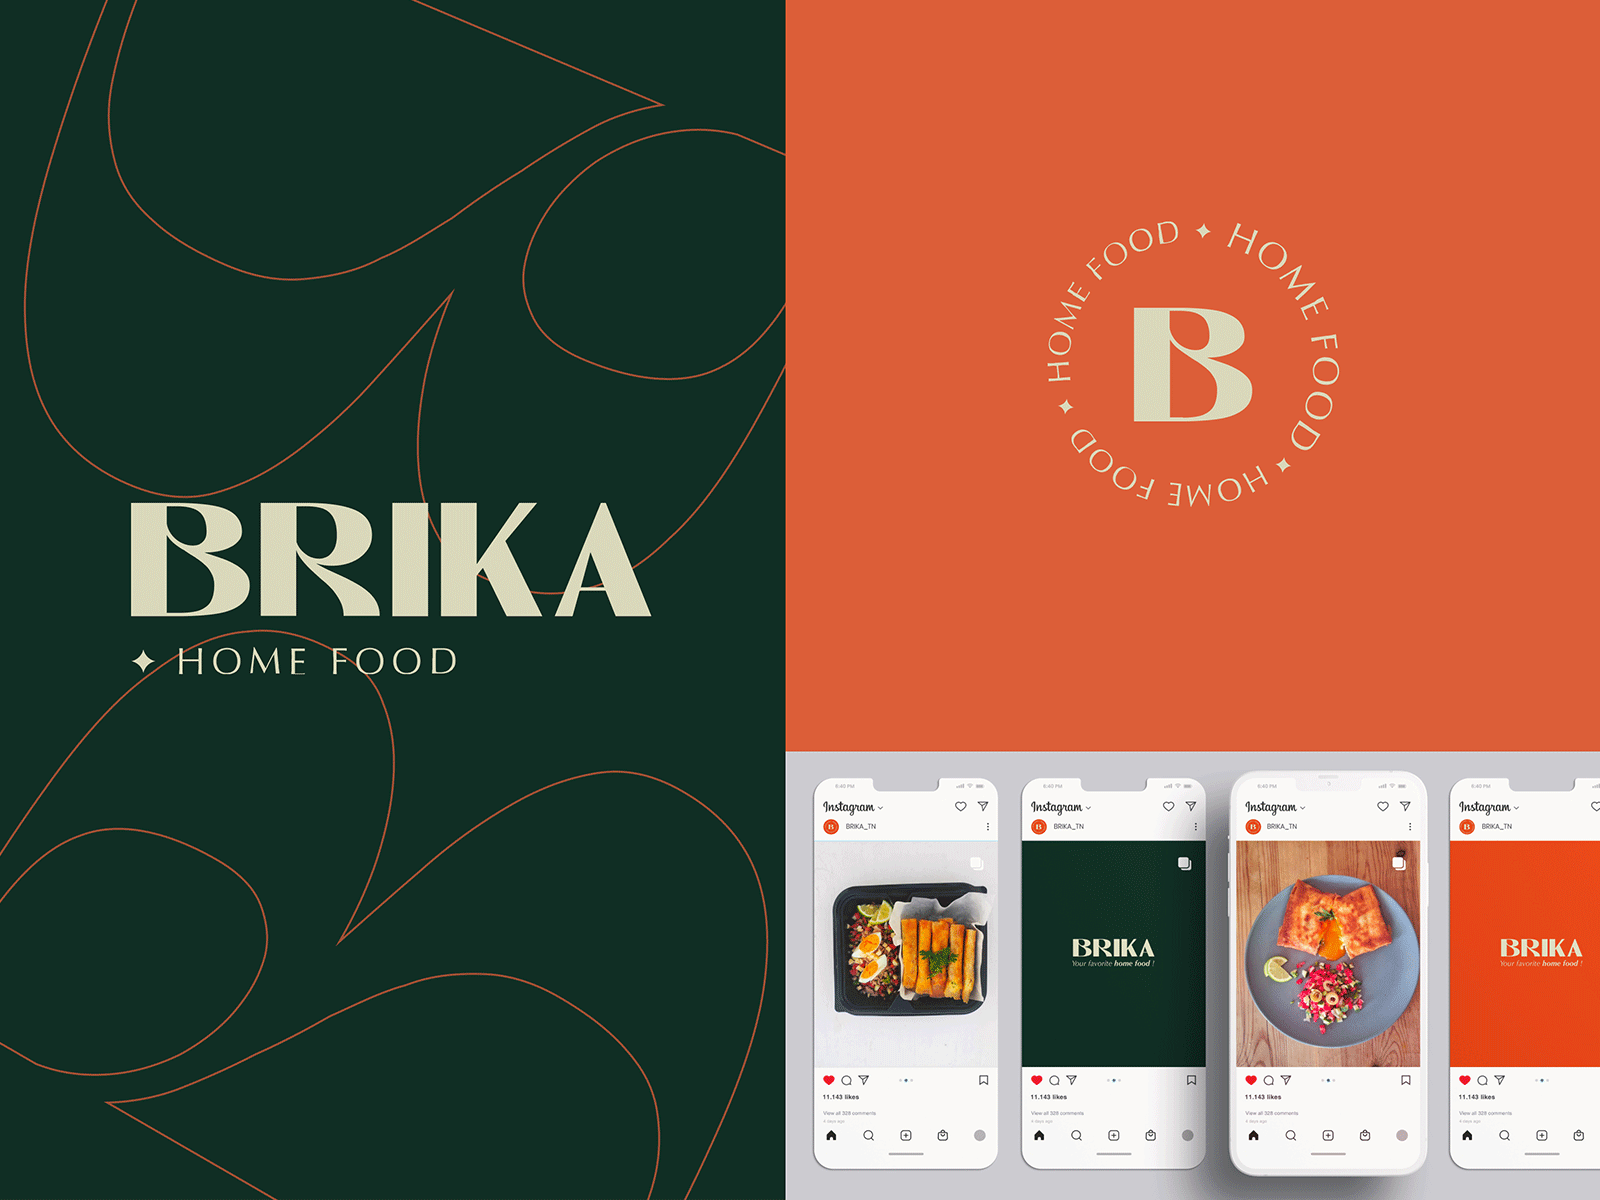 BRIKA Home Food 〜 Brand Identity